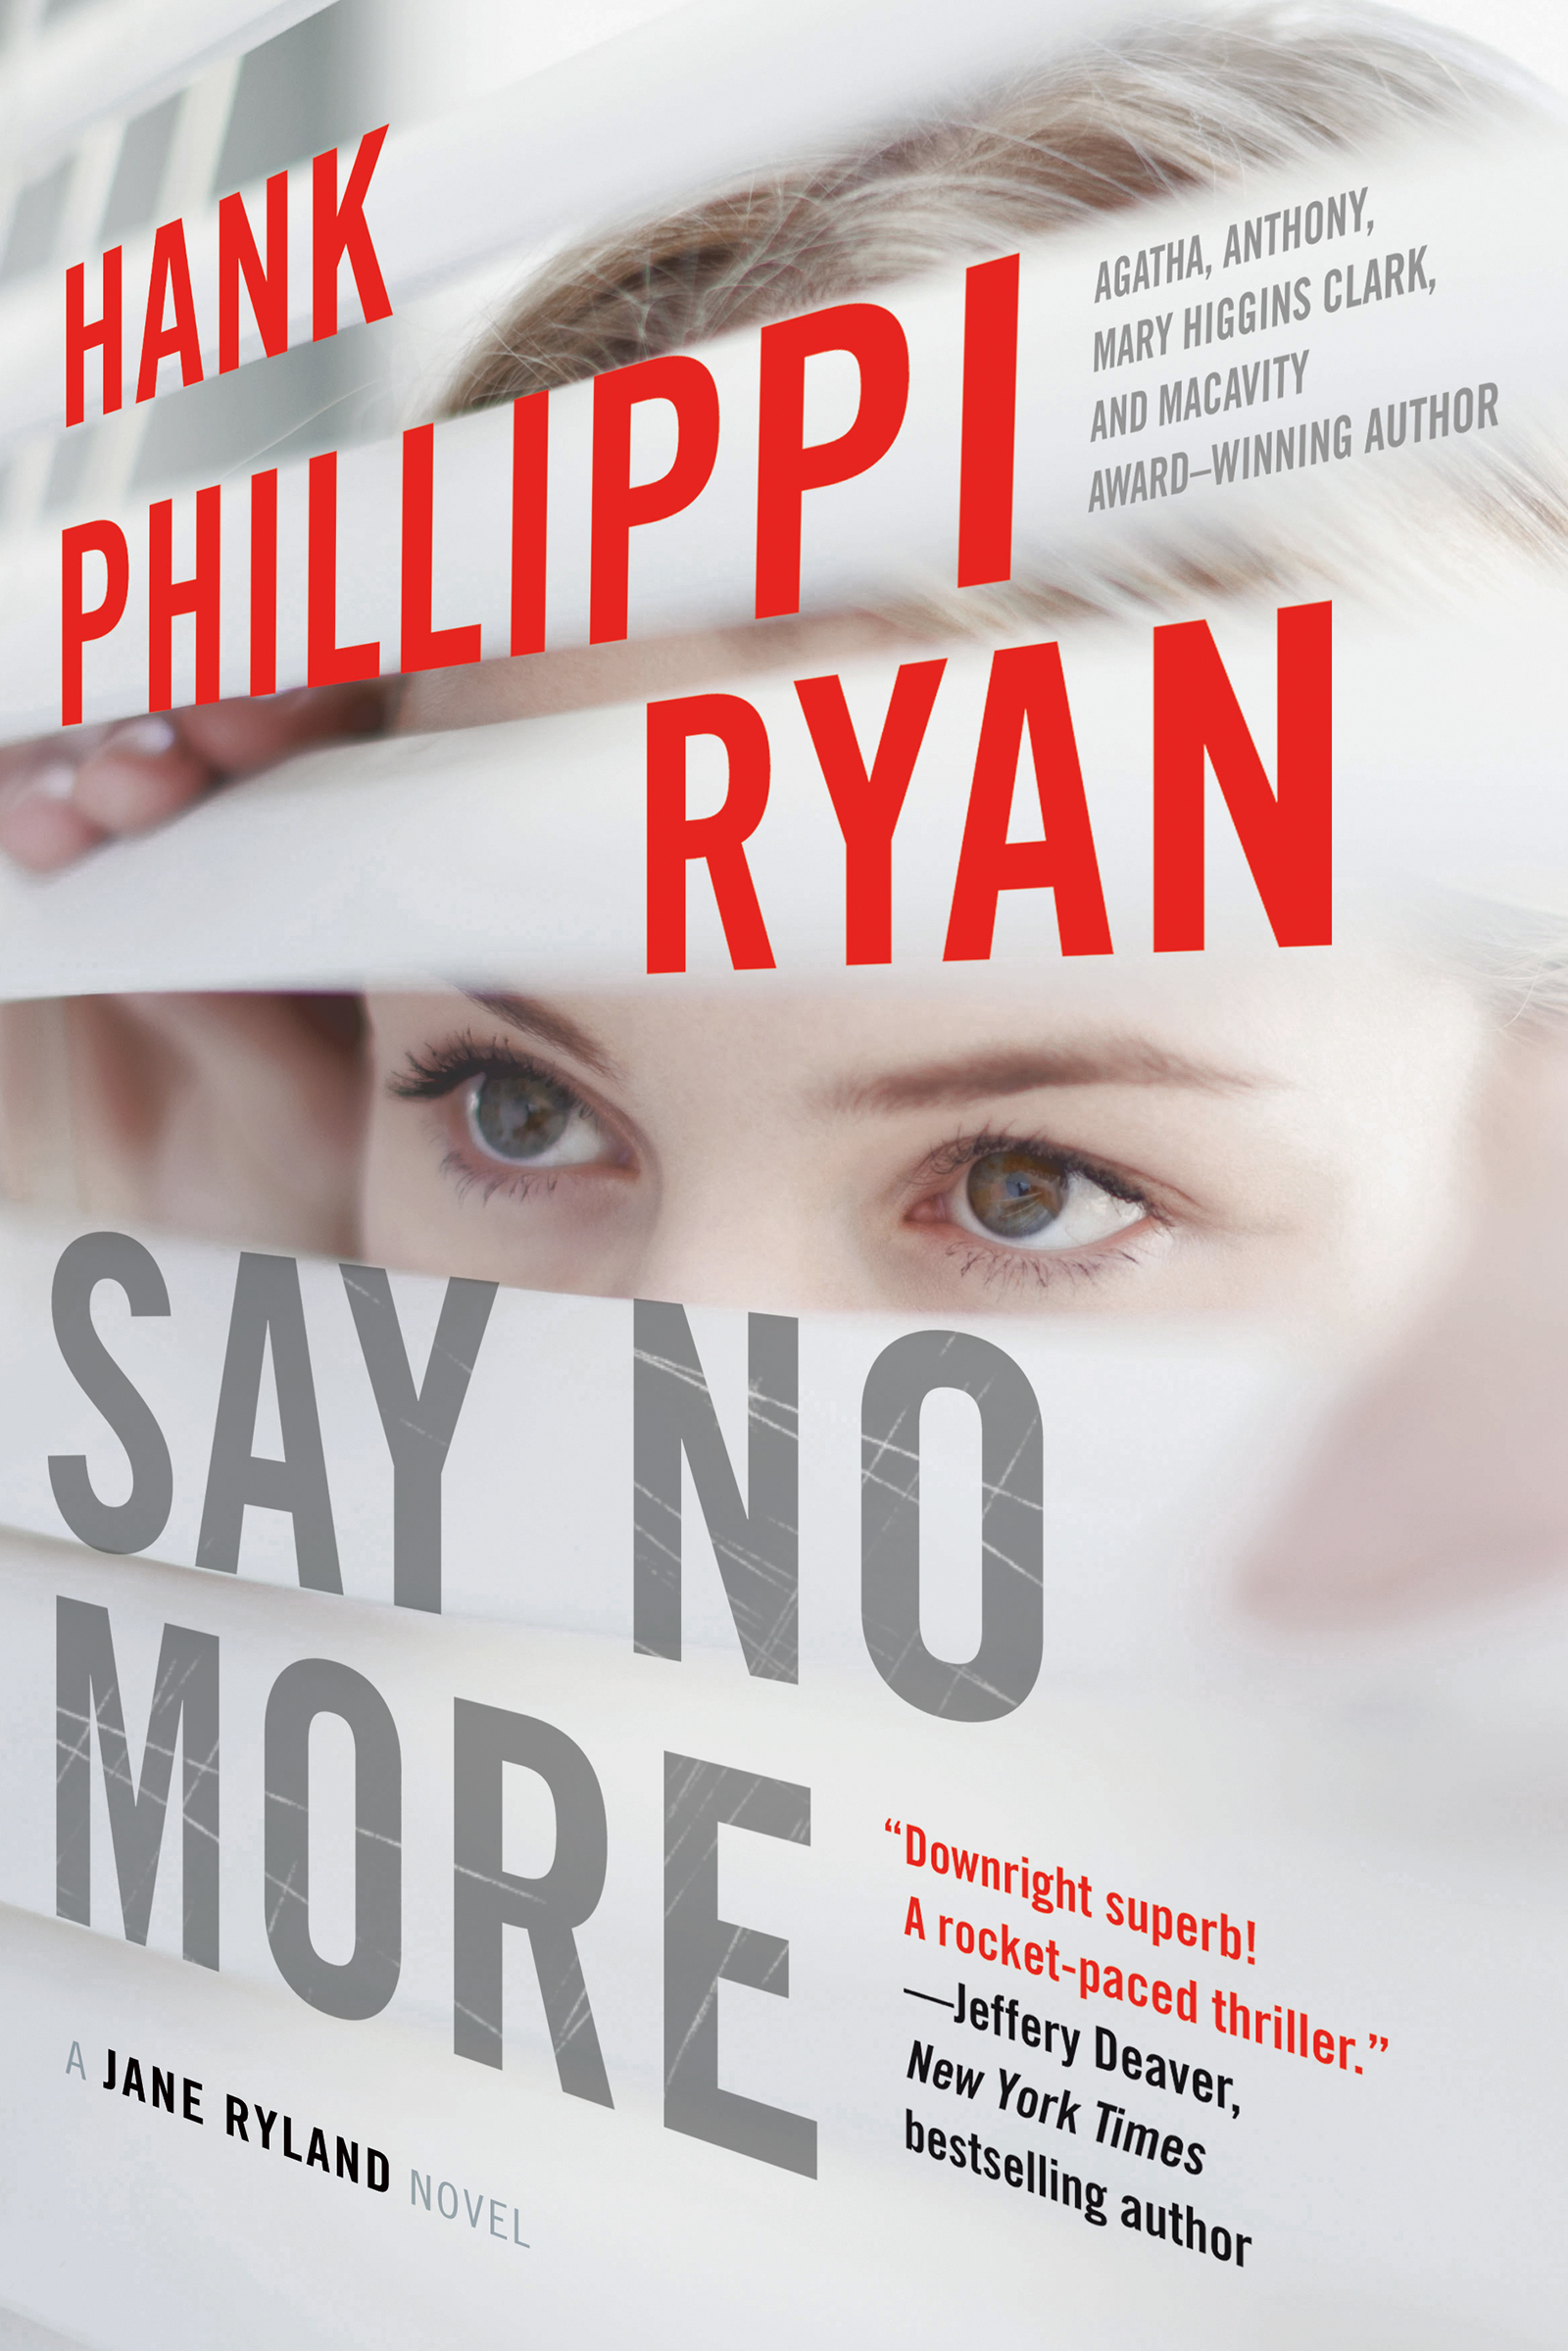 Say No More : A Jane Ryland Novel by Hank Phillippi Ryan